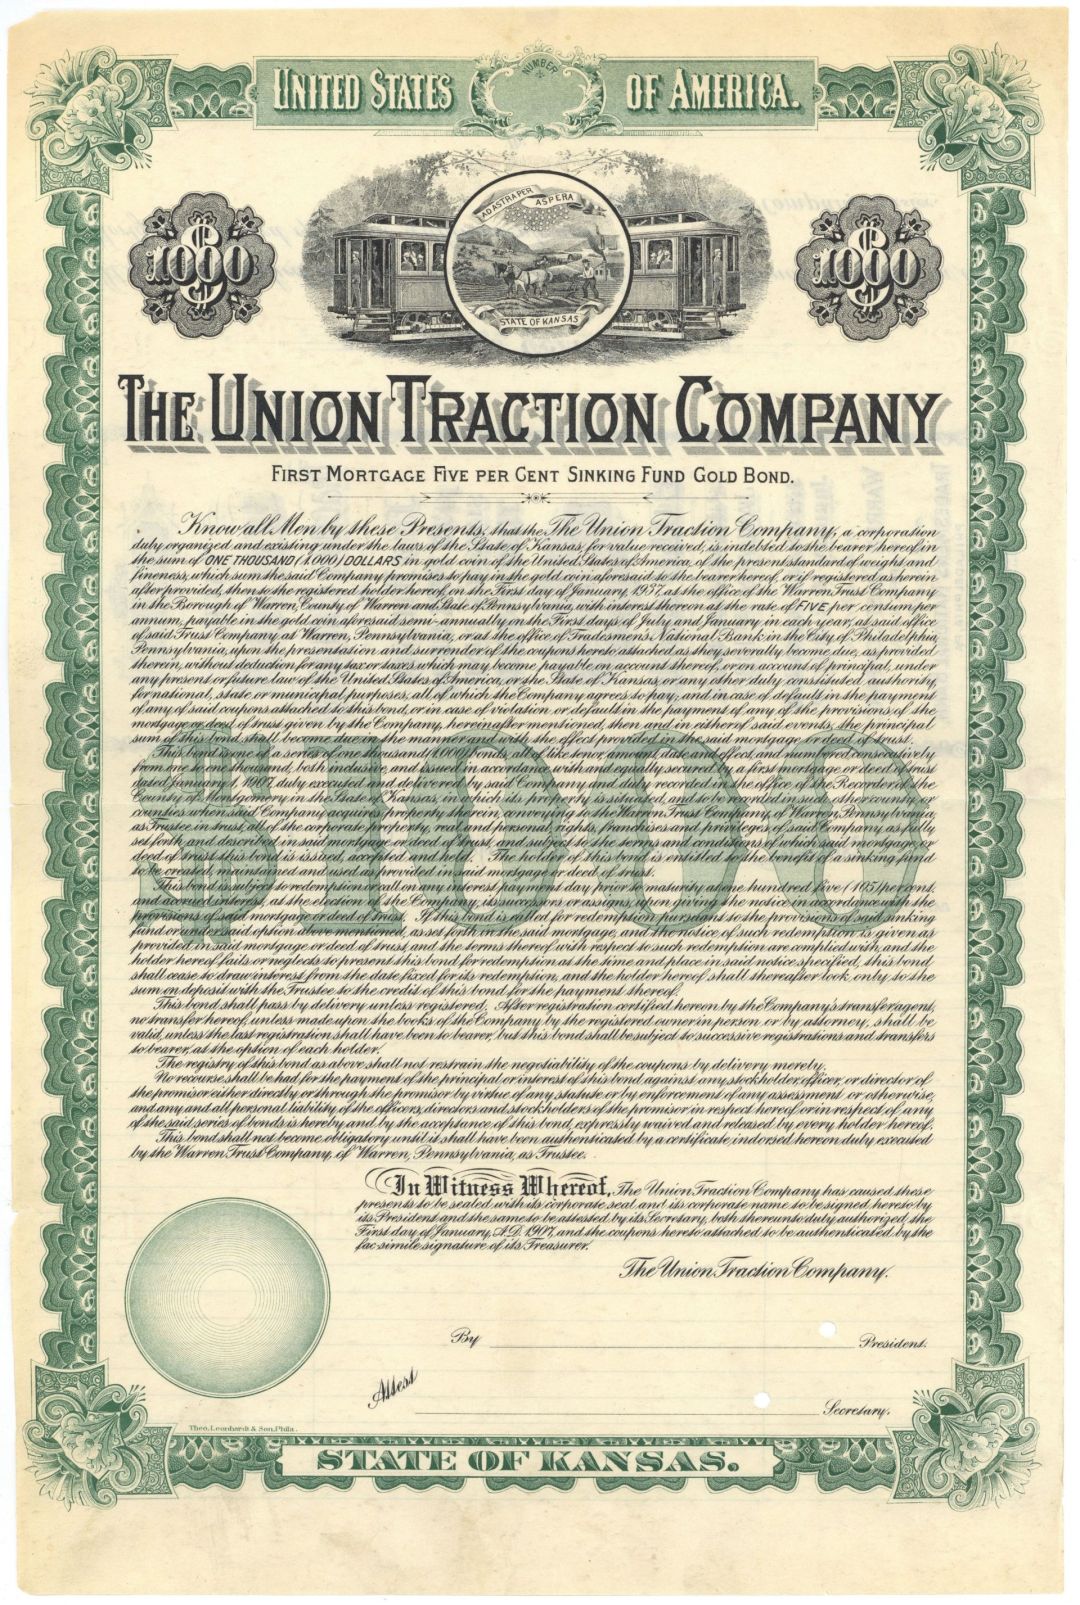 Union Traction Co. - 1907 dated Specimen $1,000 5% Railway Gold Bond - Kansas Railroad History